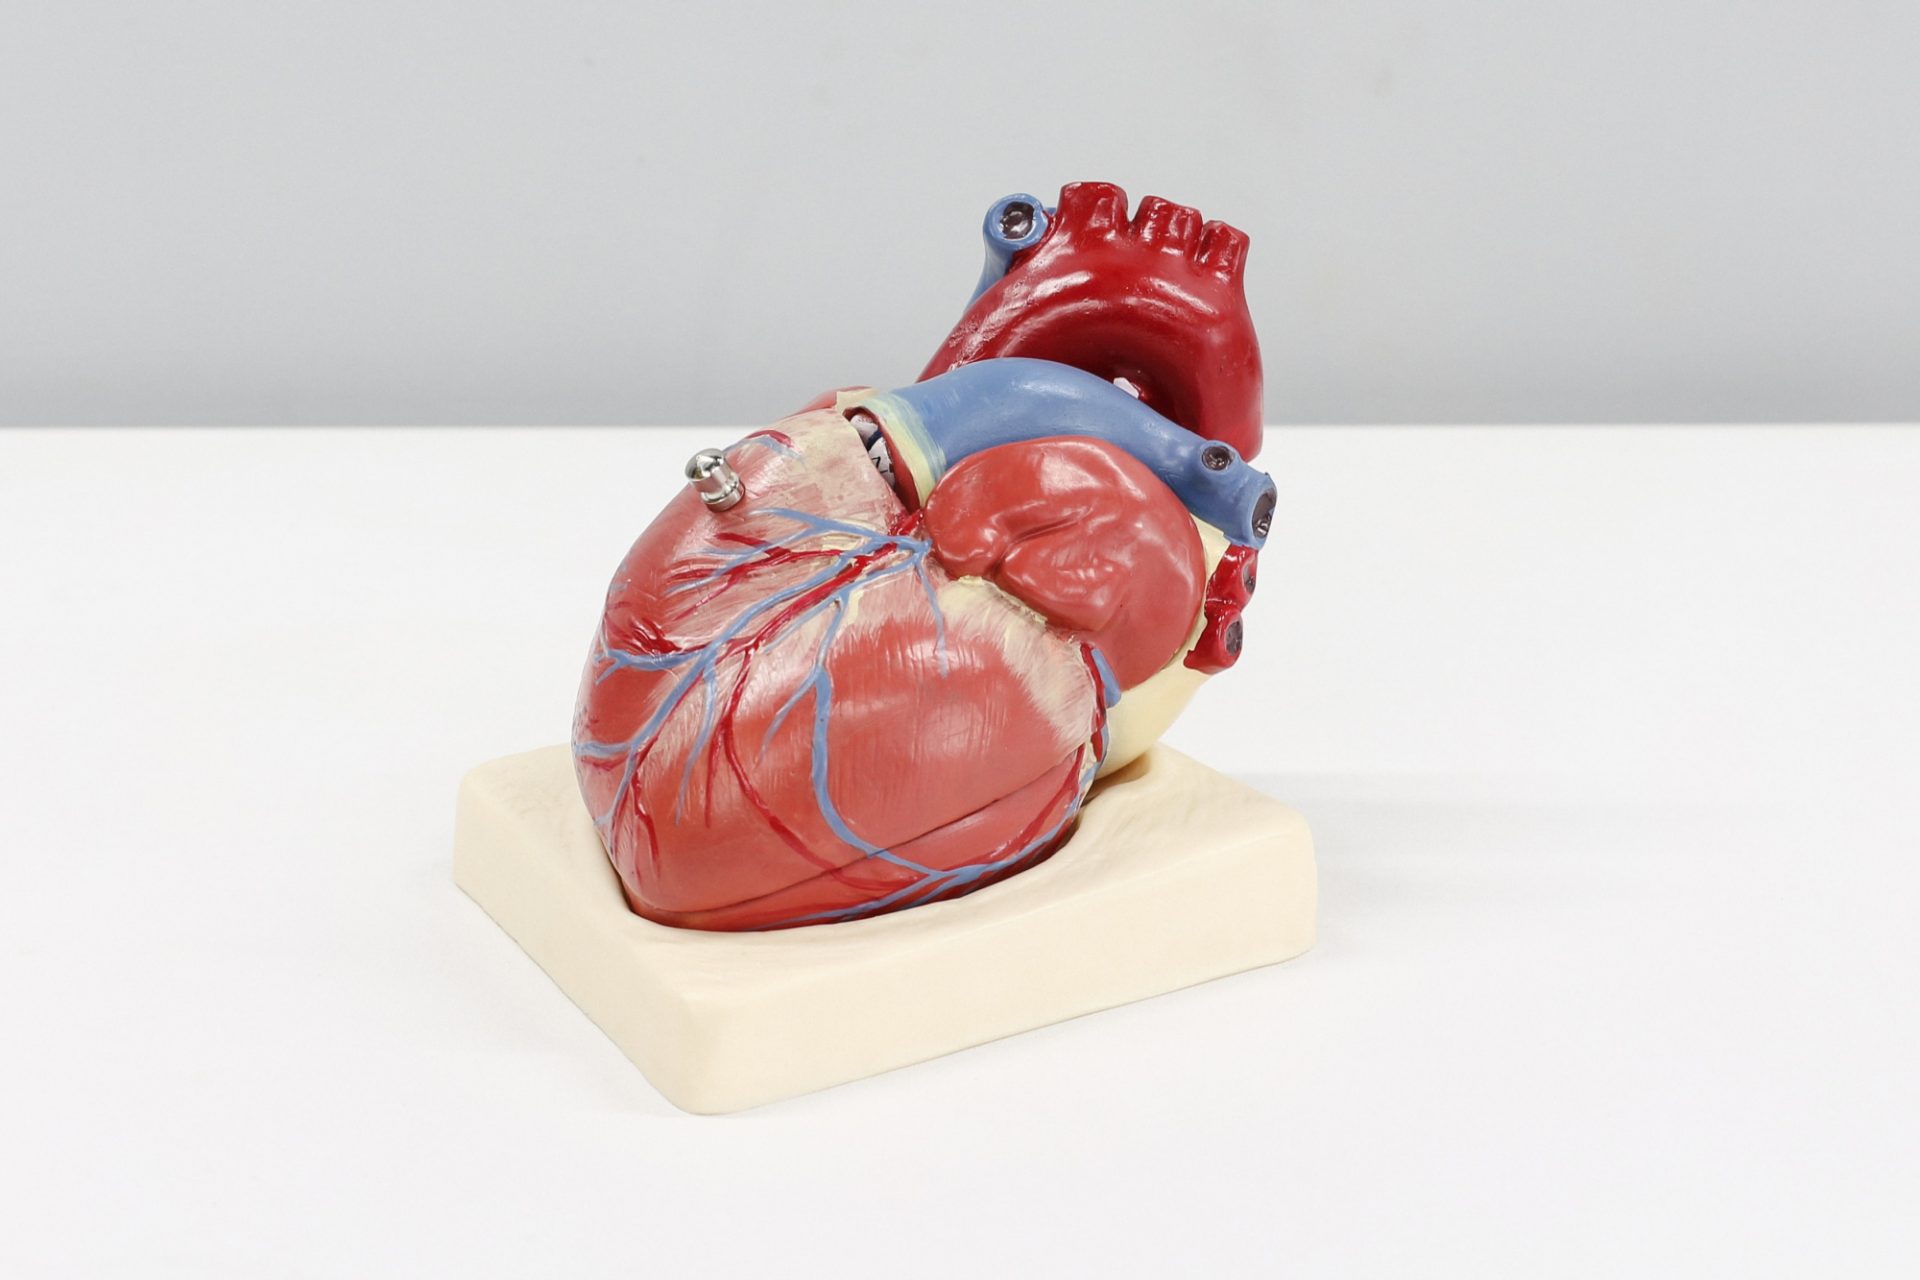 Model of a human heart.